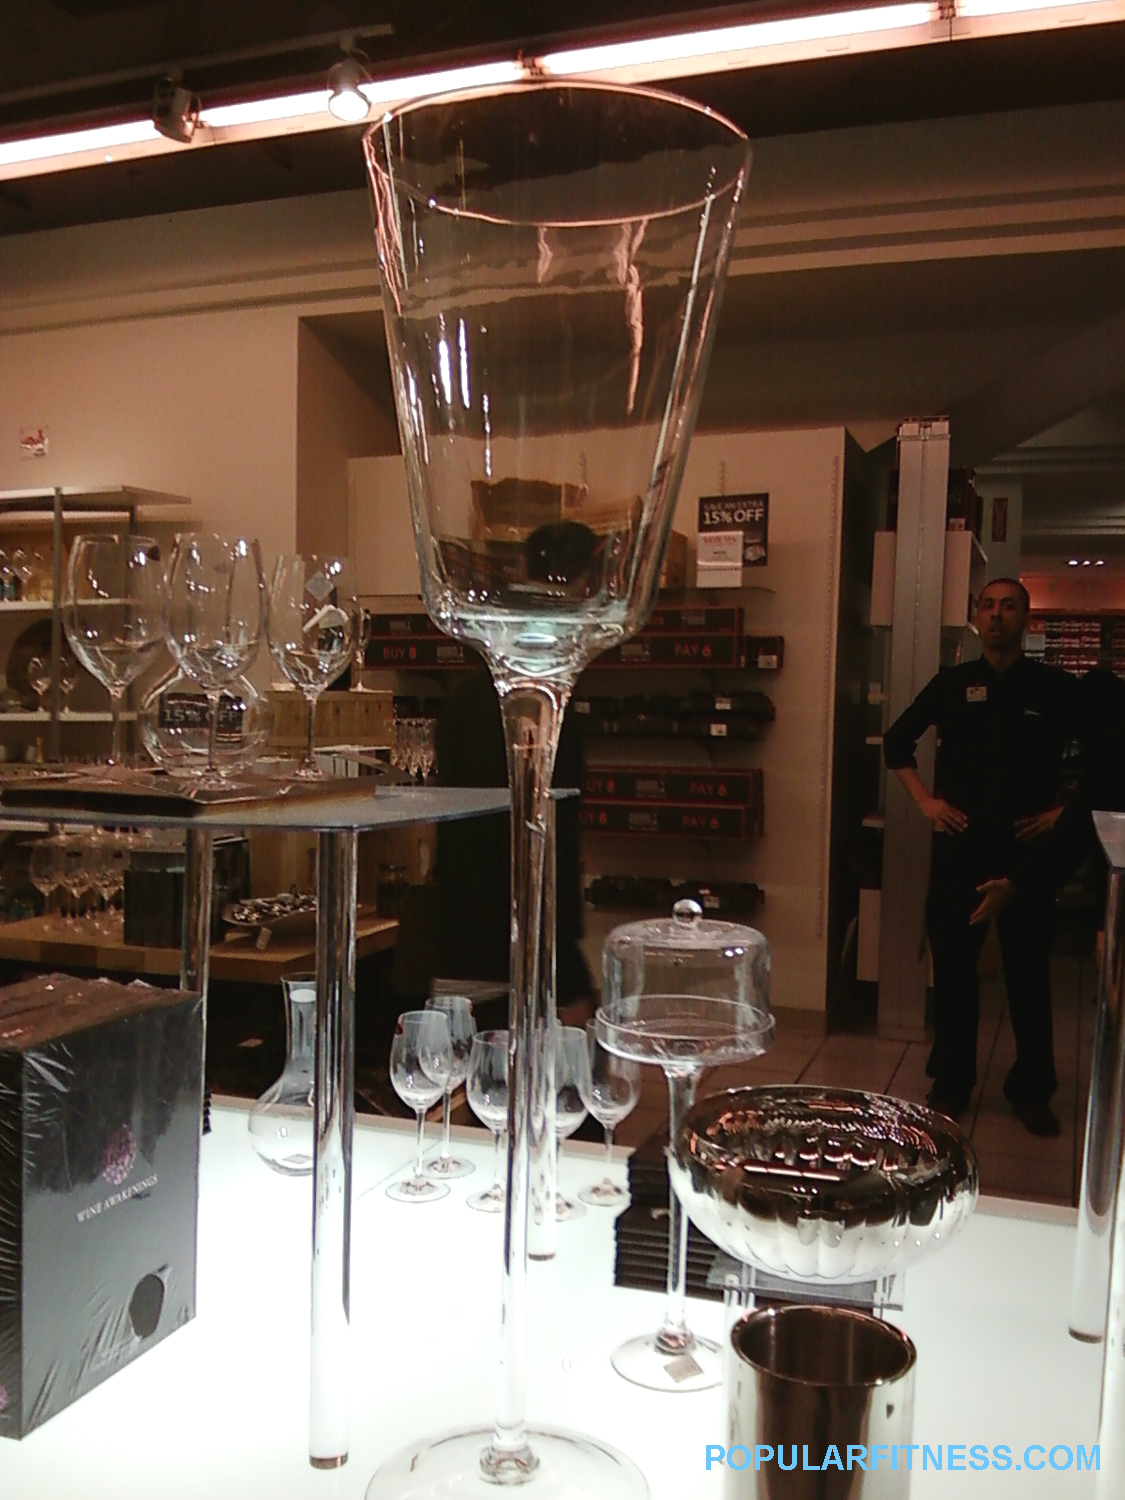 Huge, tall wine glass